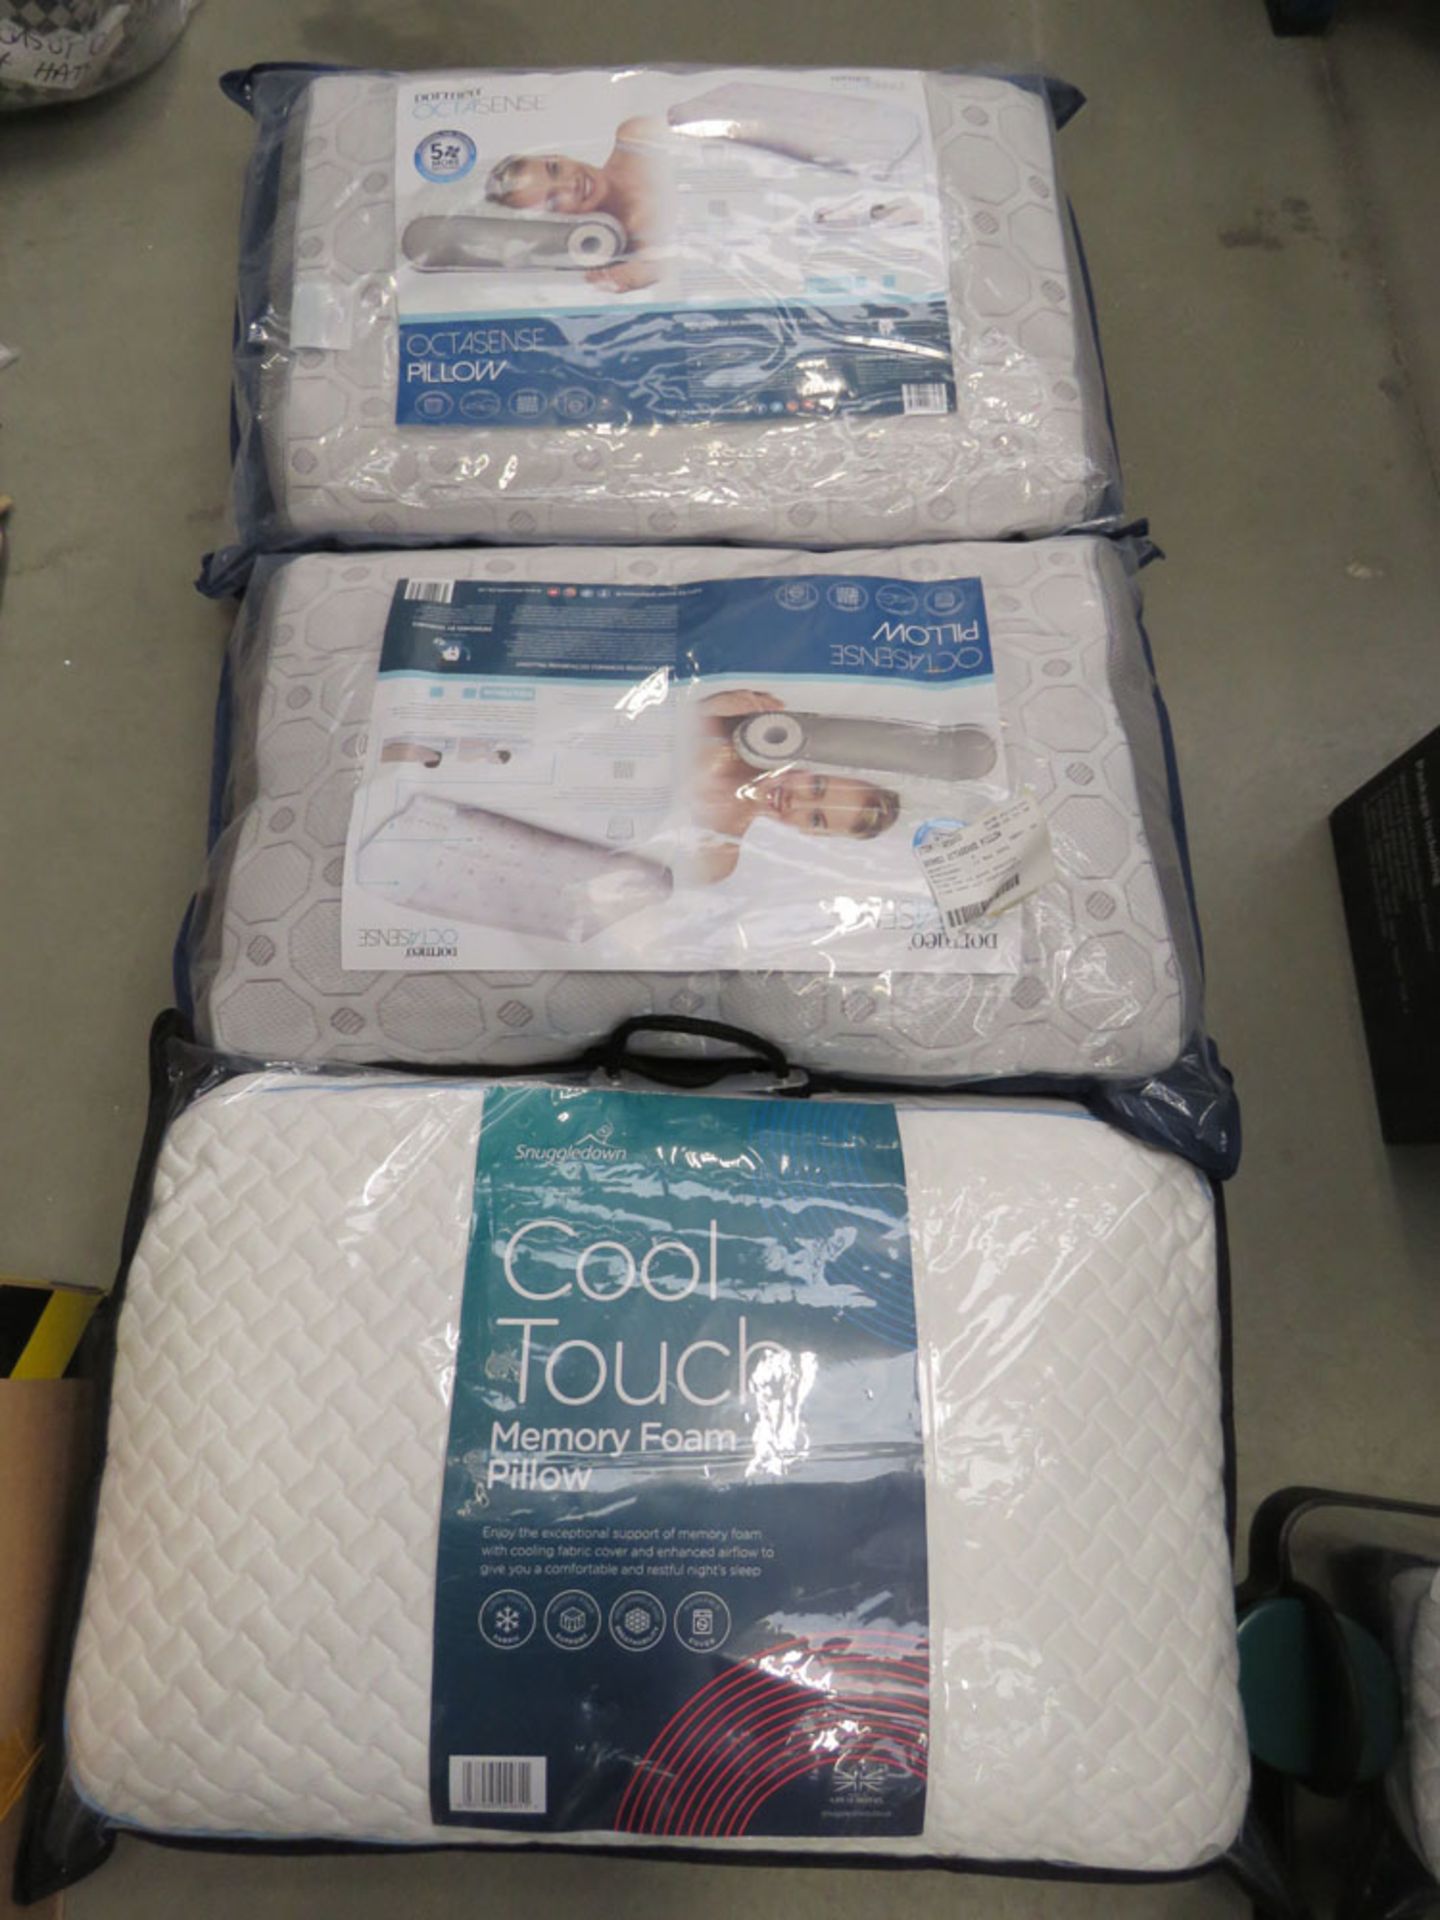 3 bagged memory foam pillows